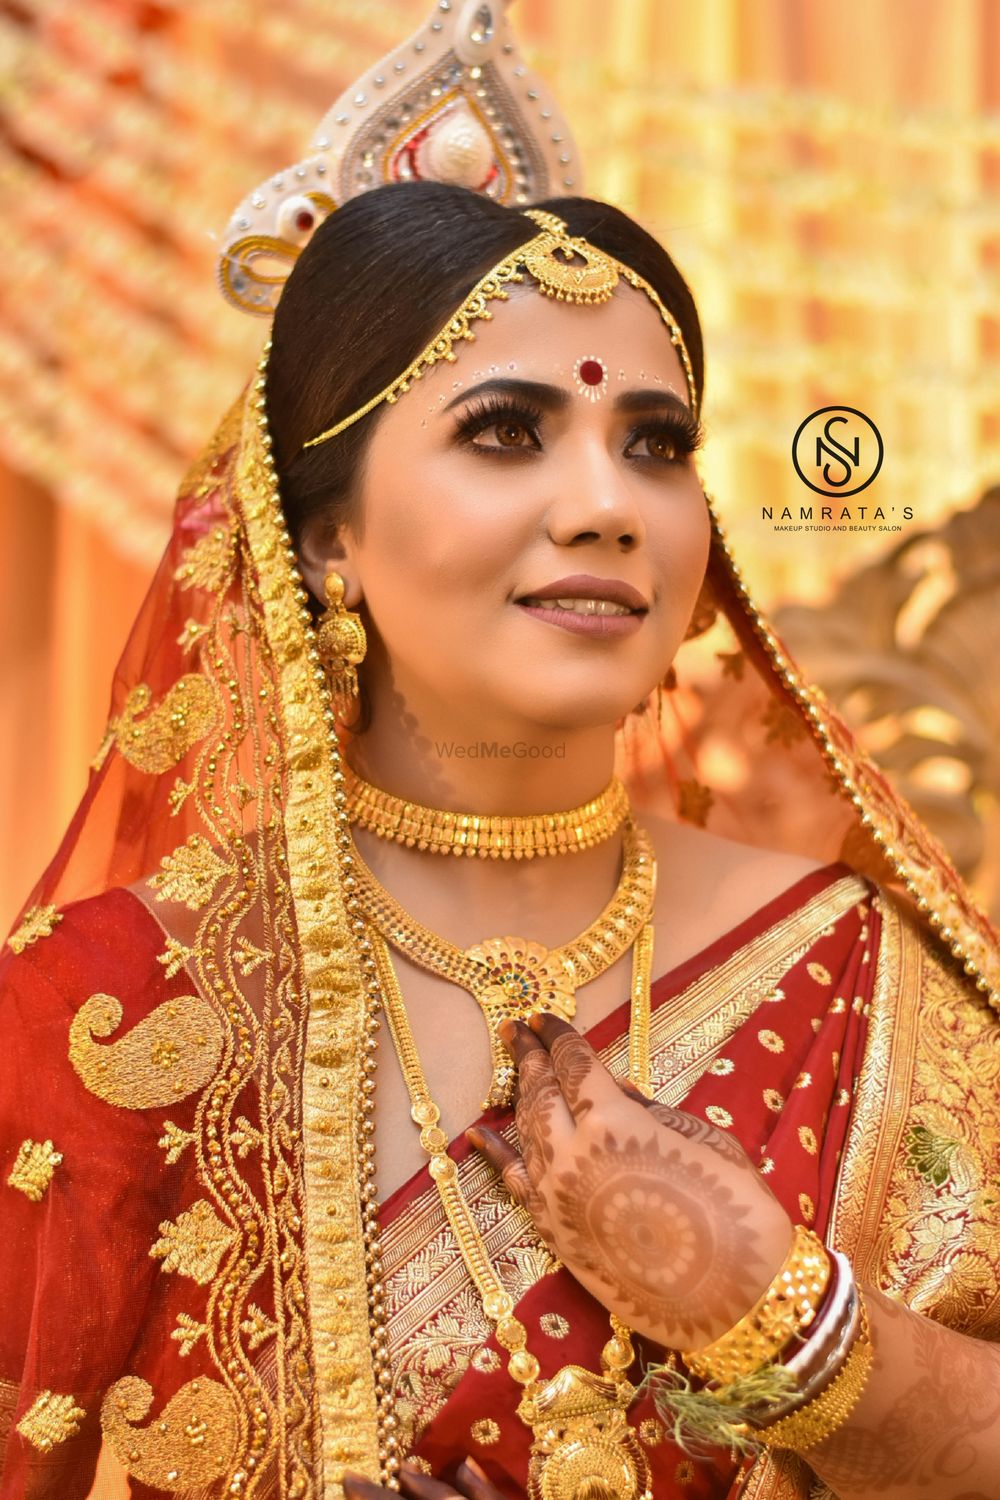 Photo From Authentic Bengali bride - By Namrata's Studio